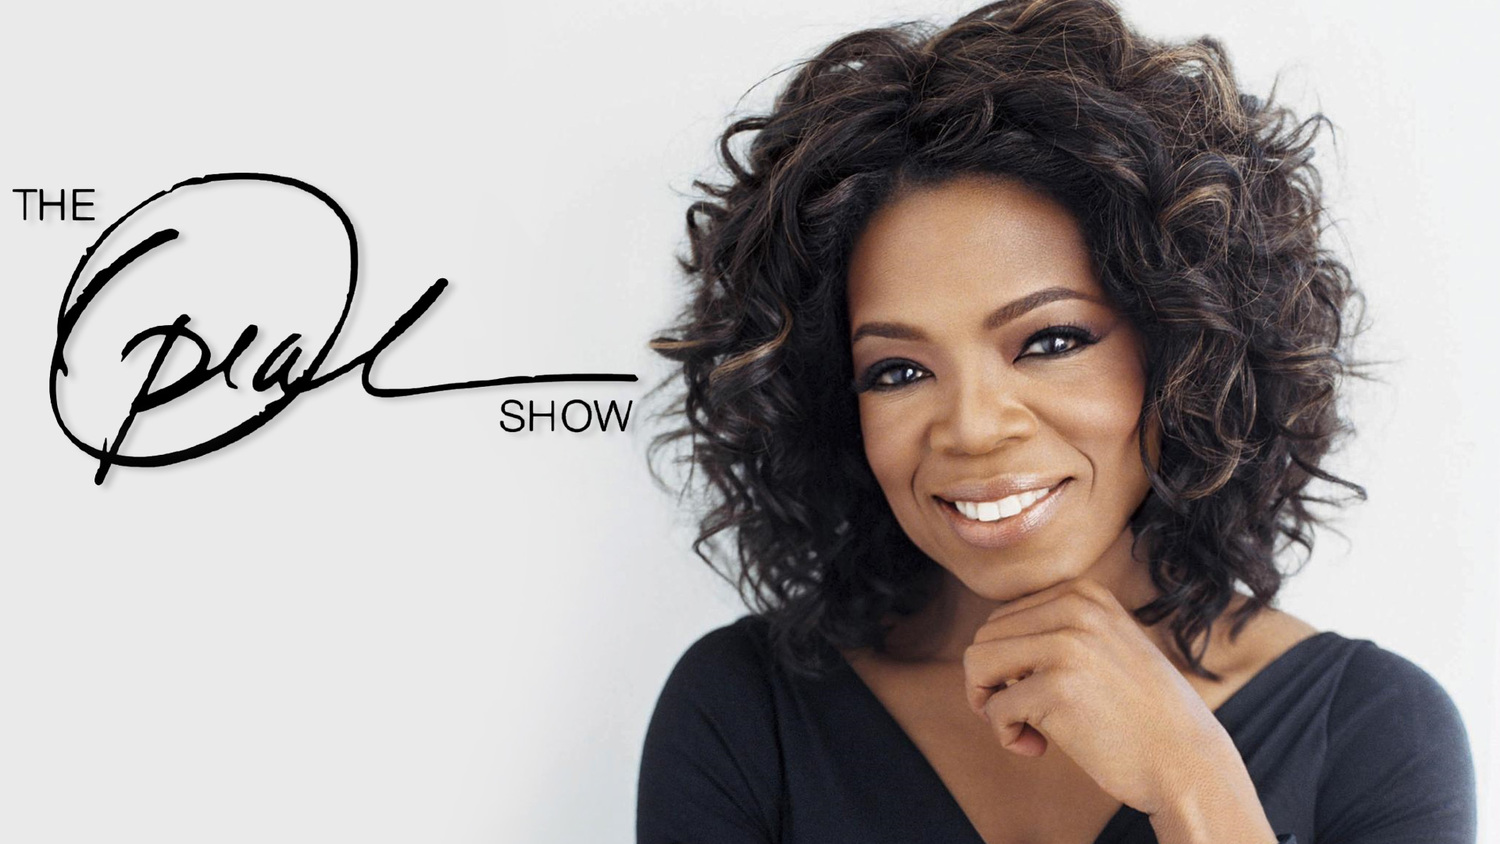 The-Oprah-Winfrey-Show.jpg